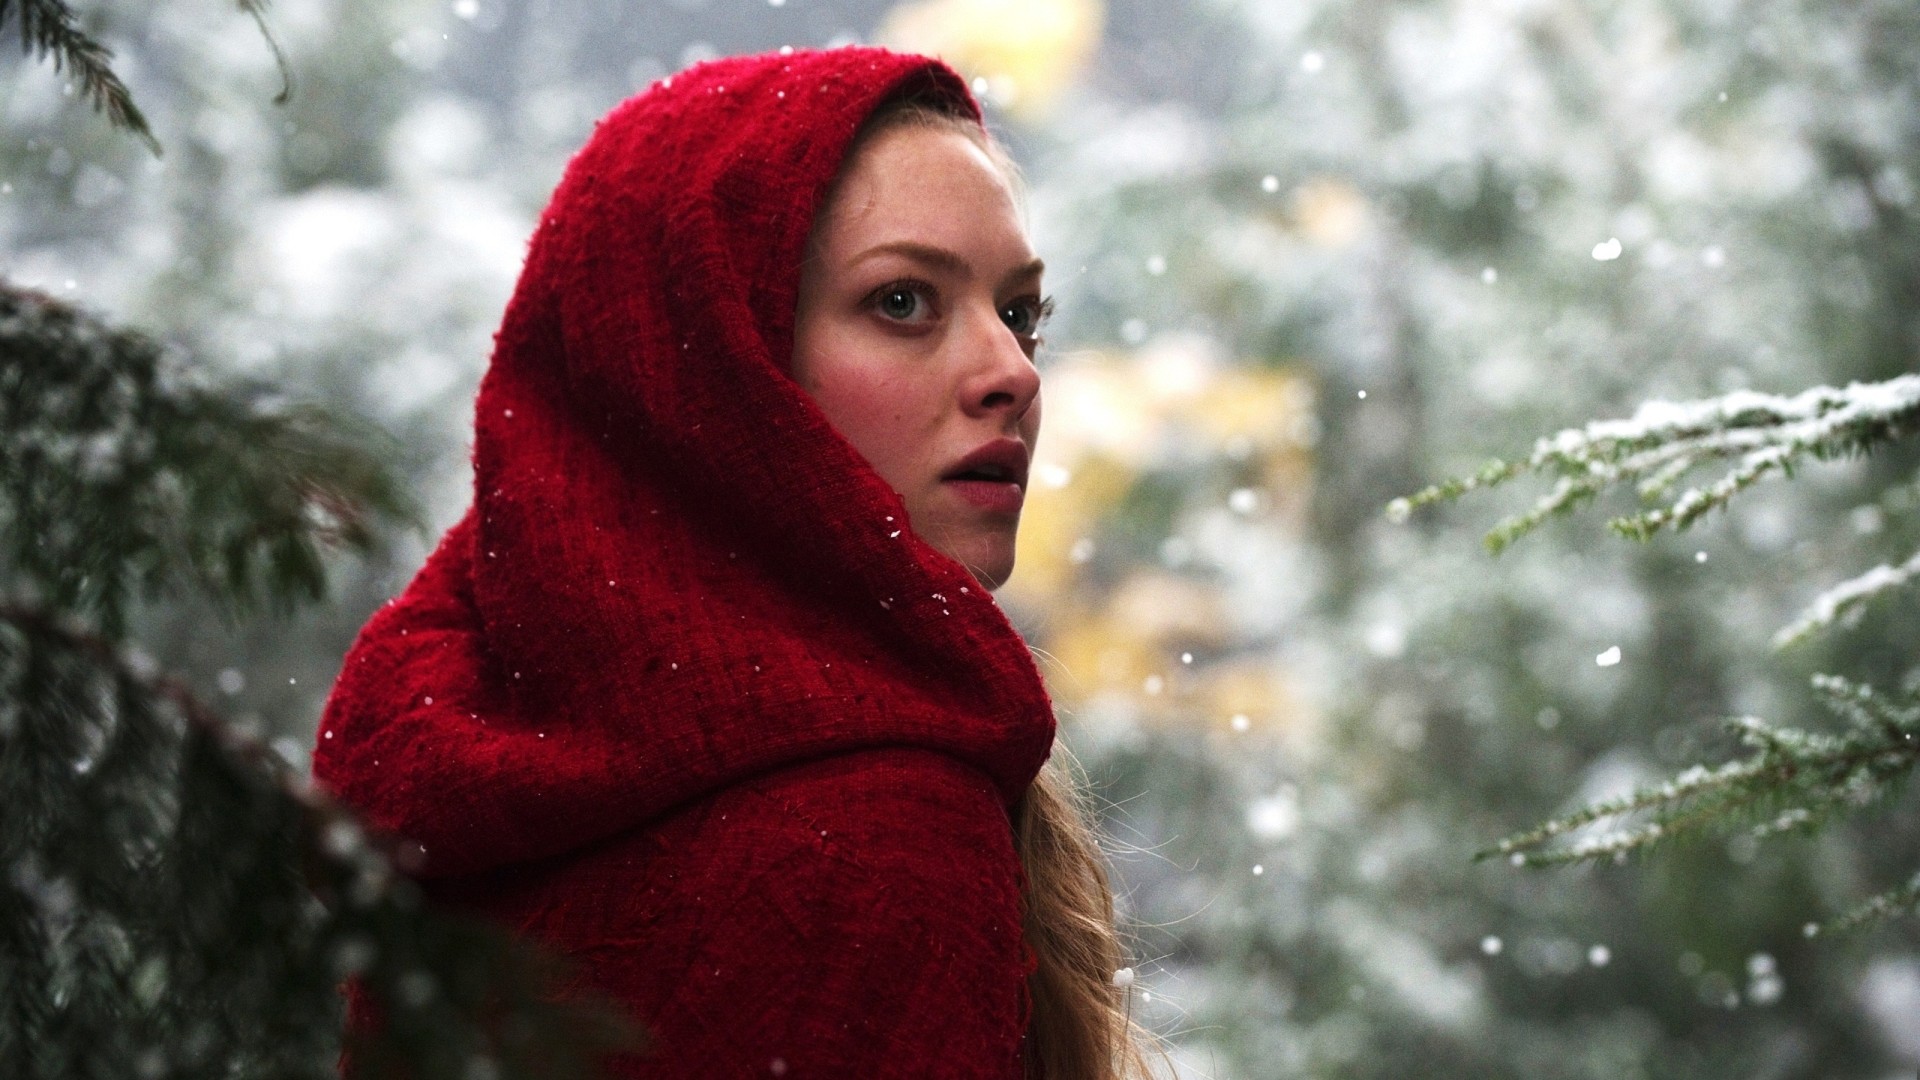 Amanda Seyfried Red Riding Hood 1920x1080